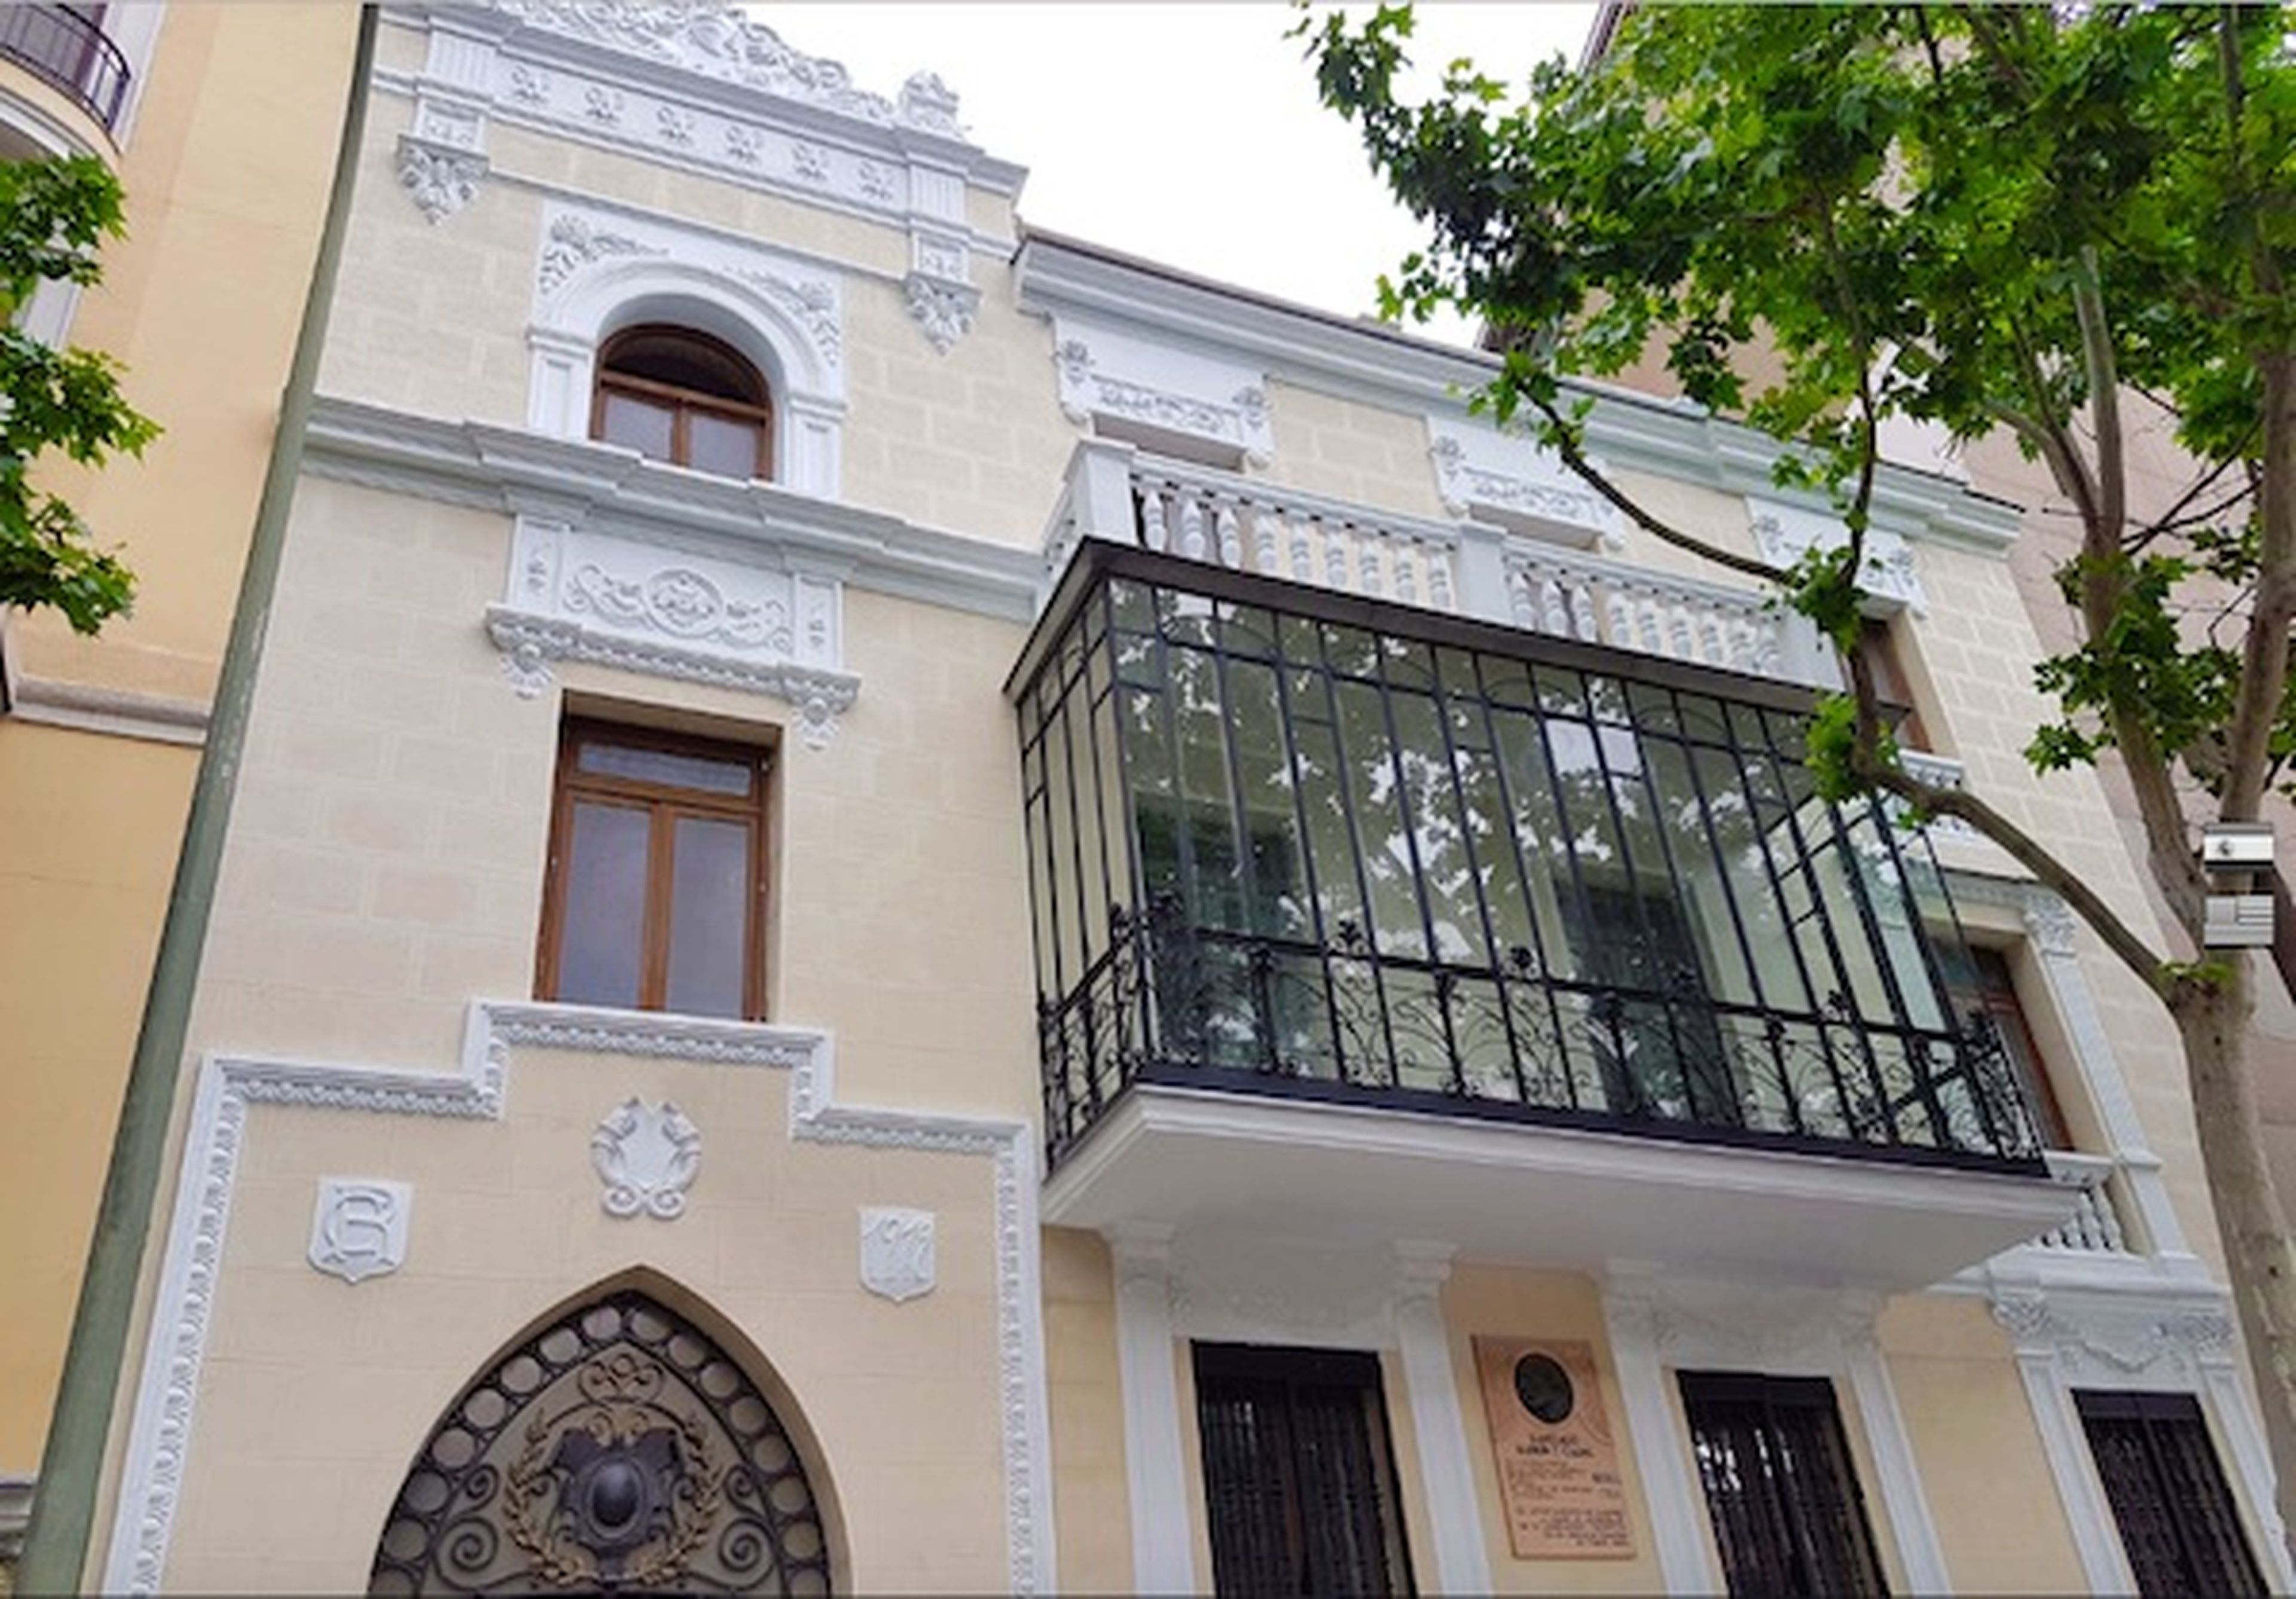 Palacete de Ramón y Cajal